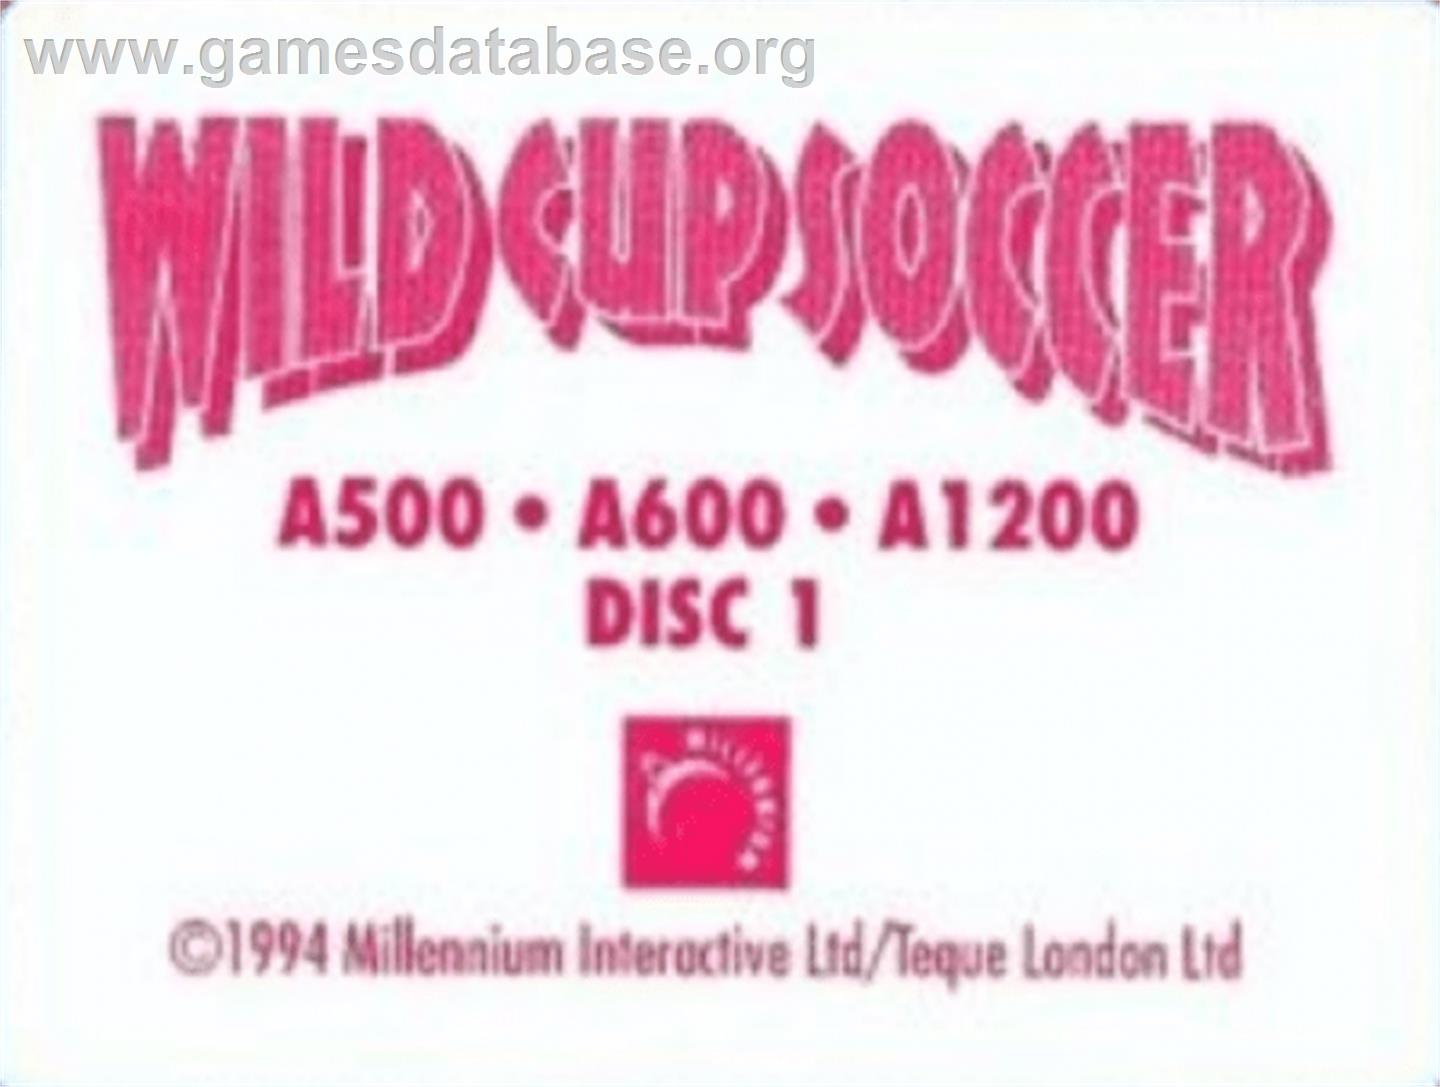 Wild Cup Soccer - Commodore Amiga - Artwork - Cartridge Top